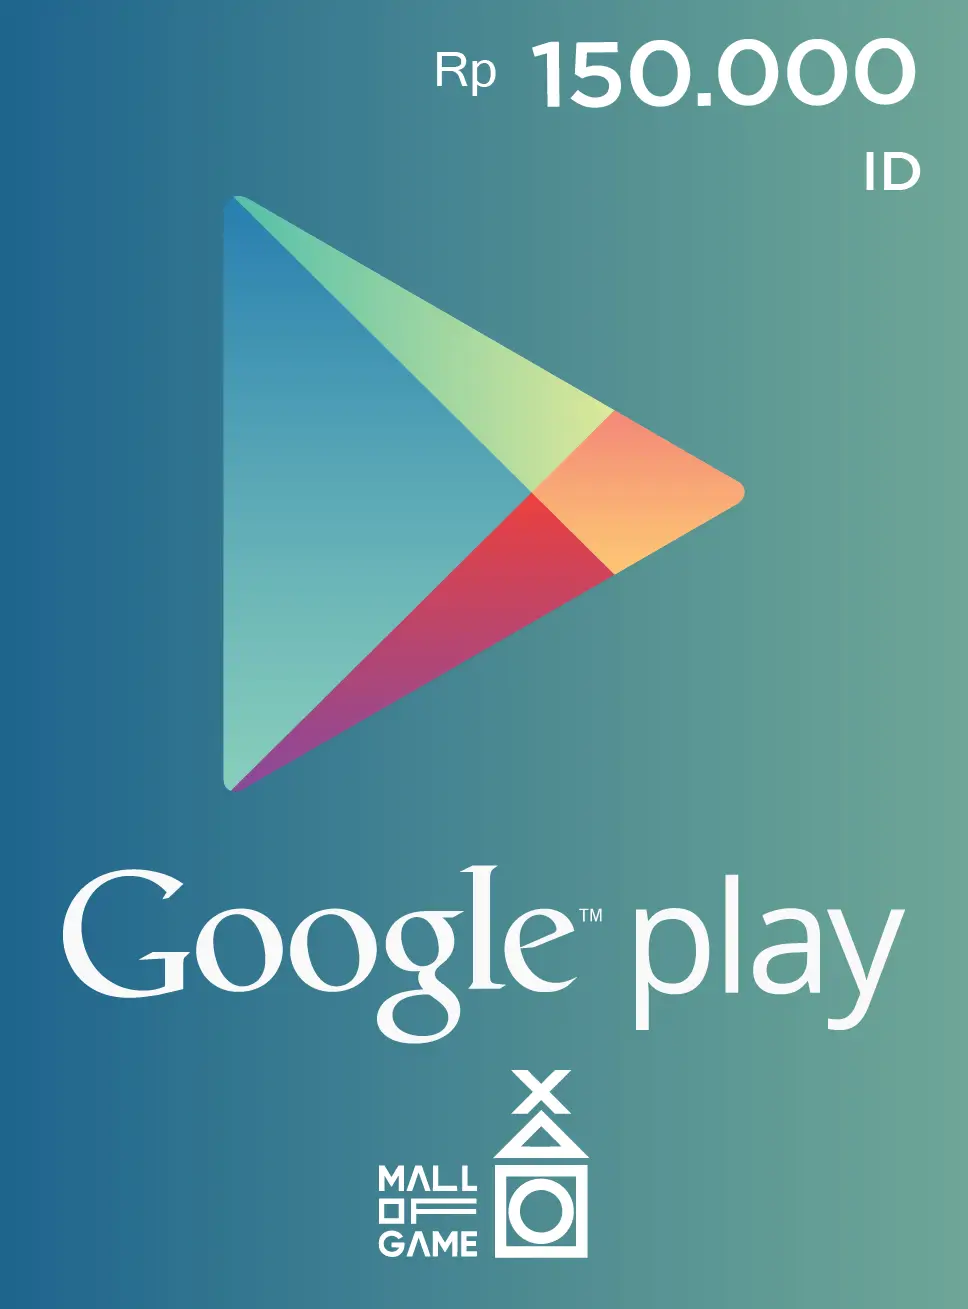 Google Play IDR150,000 Gift Card (ID)